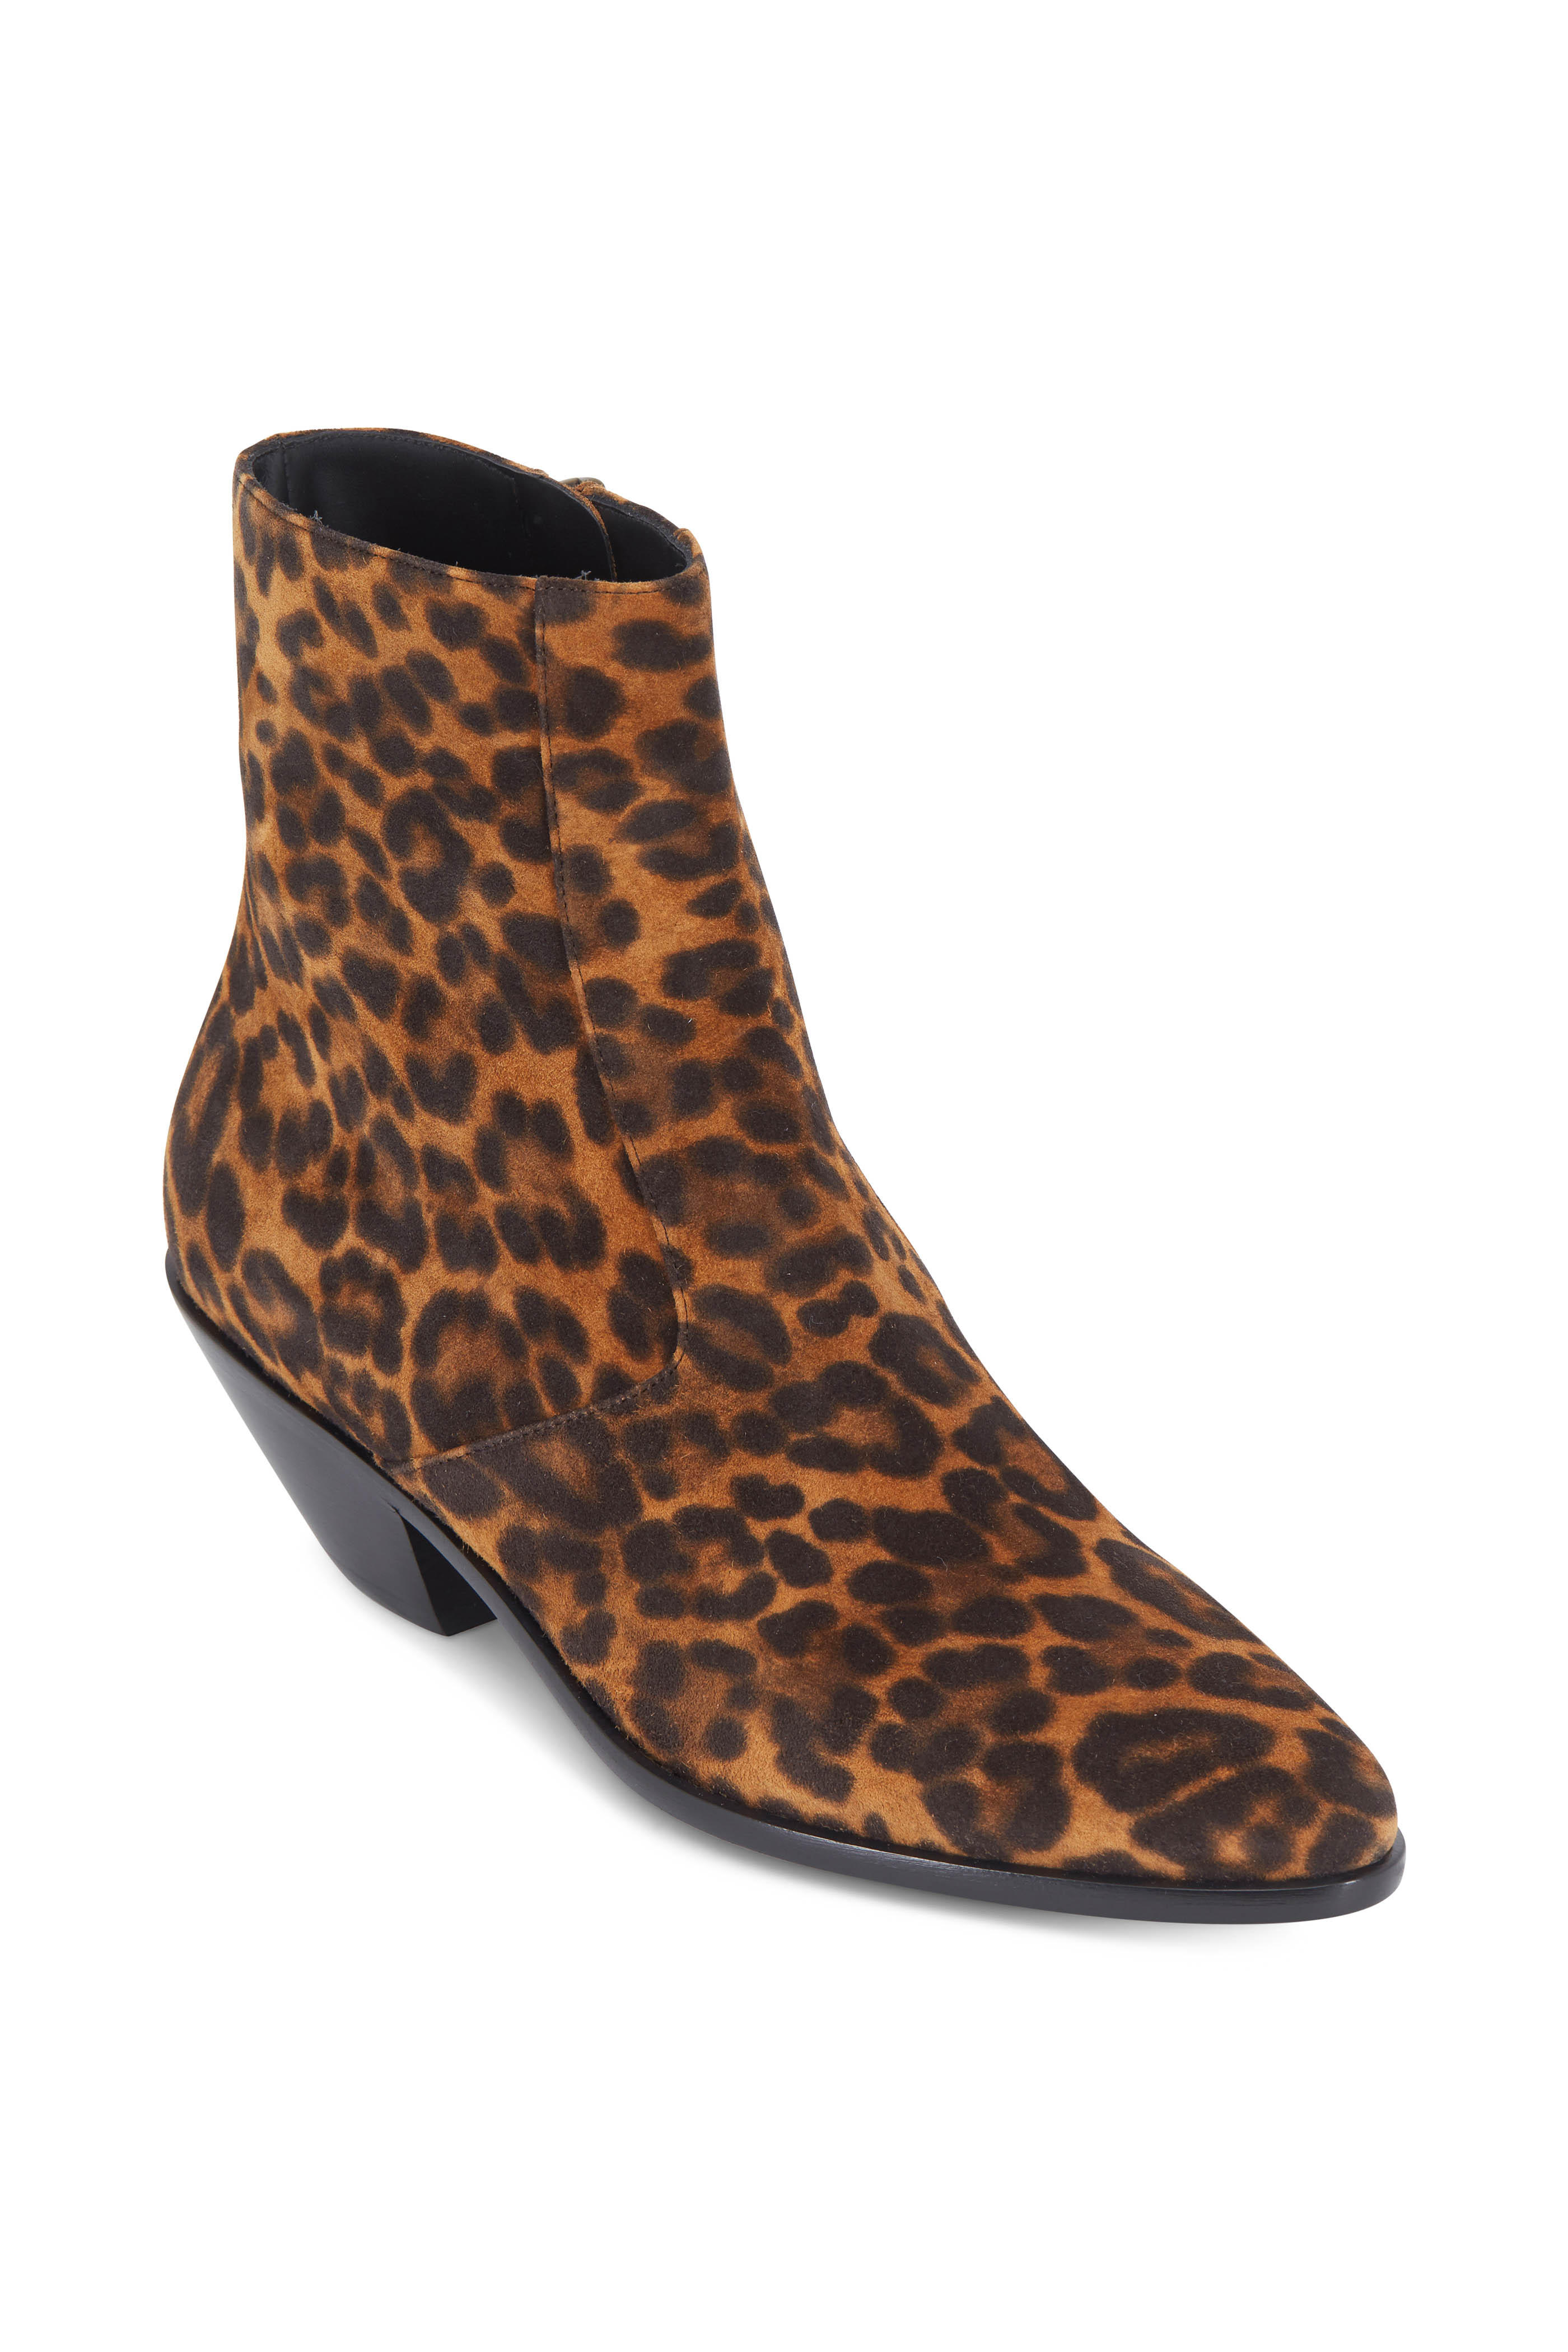 ysl leopard shoes